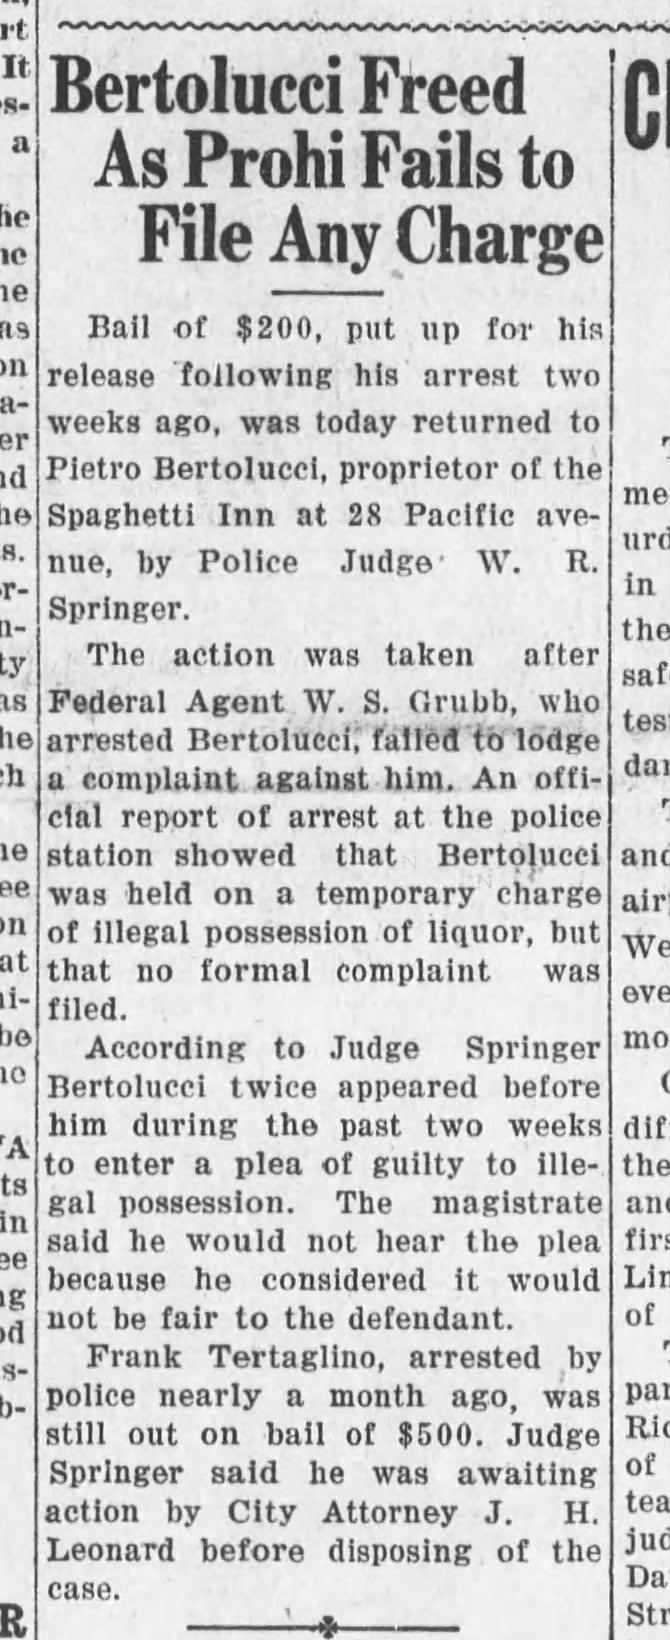 Santa Cruz Evening News, 28 September 1931, Page 1, Column 2